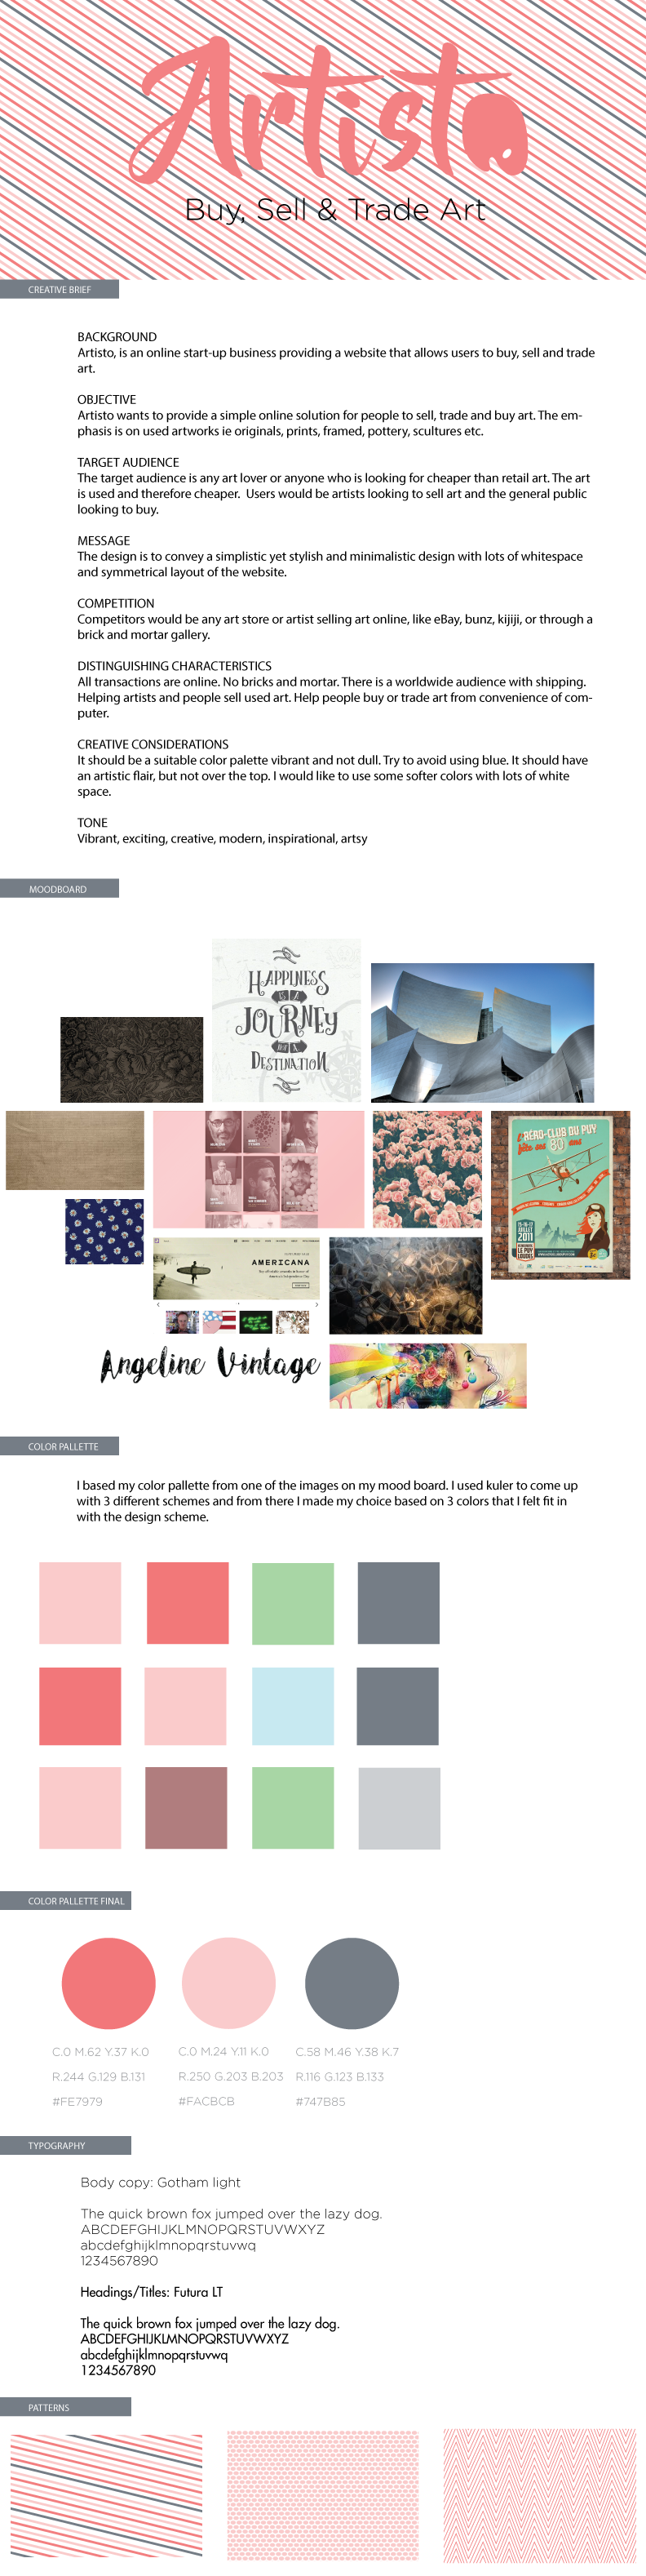 Adobe Portfolio creative brief branding  logo color palette mood board